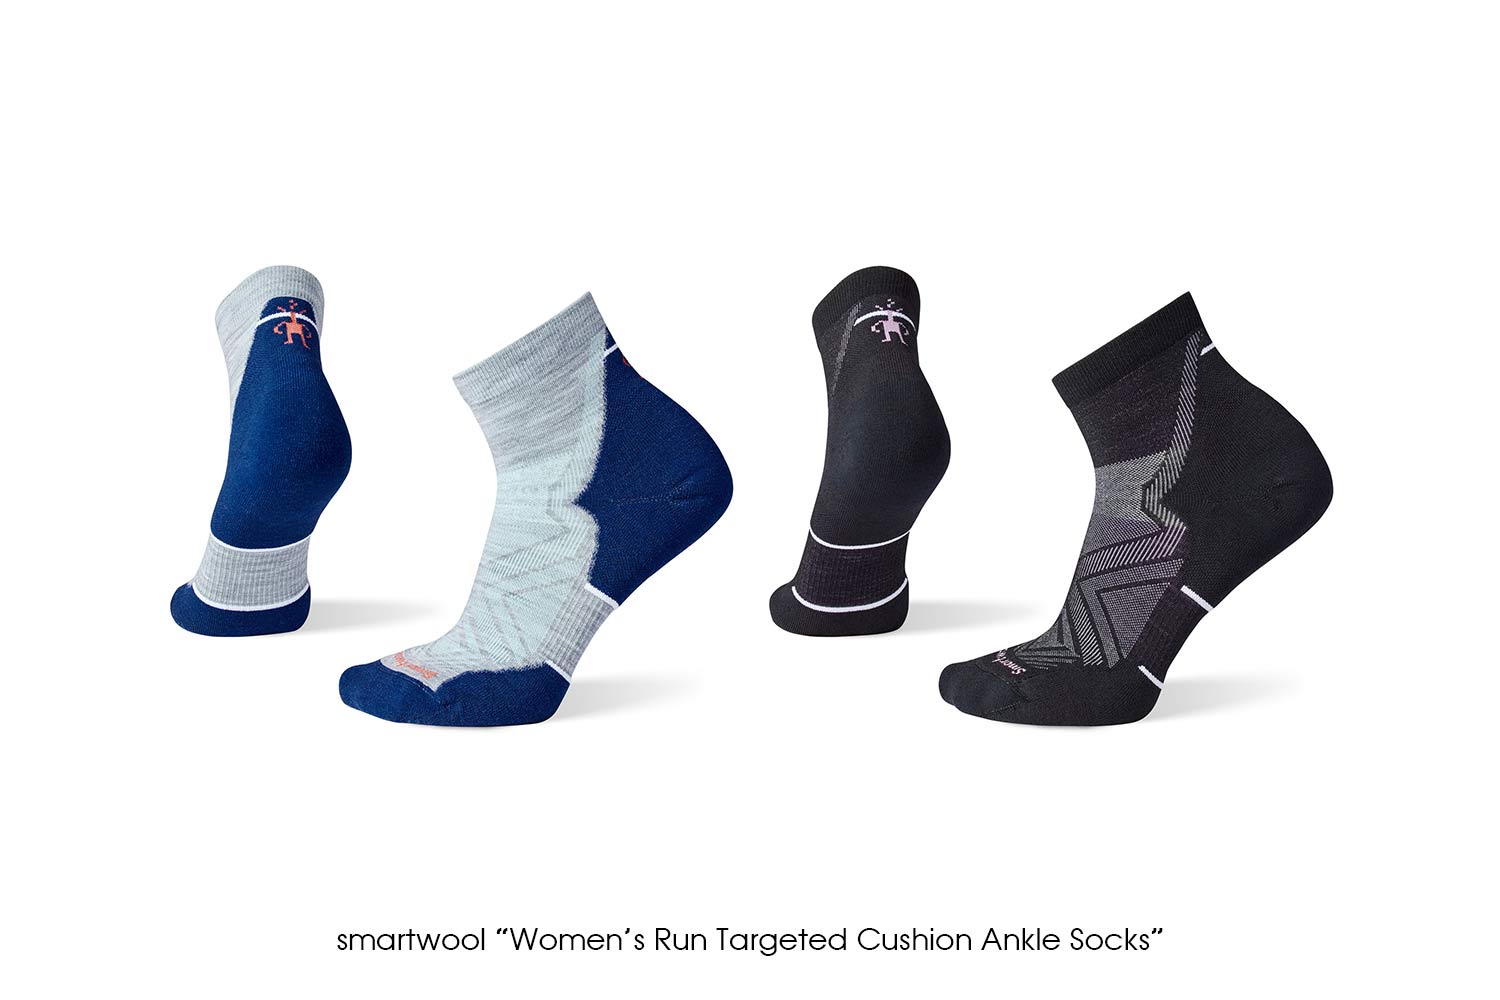 smartwool "Women’s Run Targeted Cushion Ankle Socks"